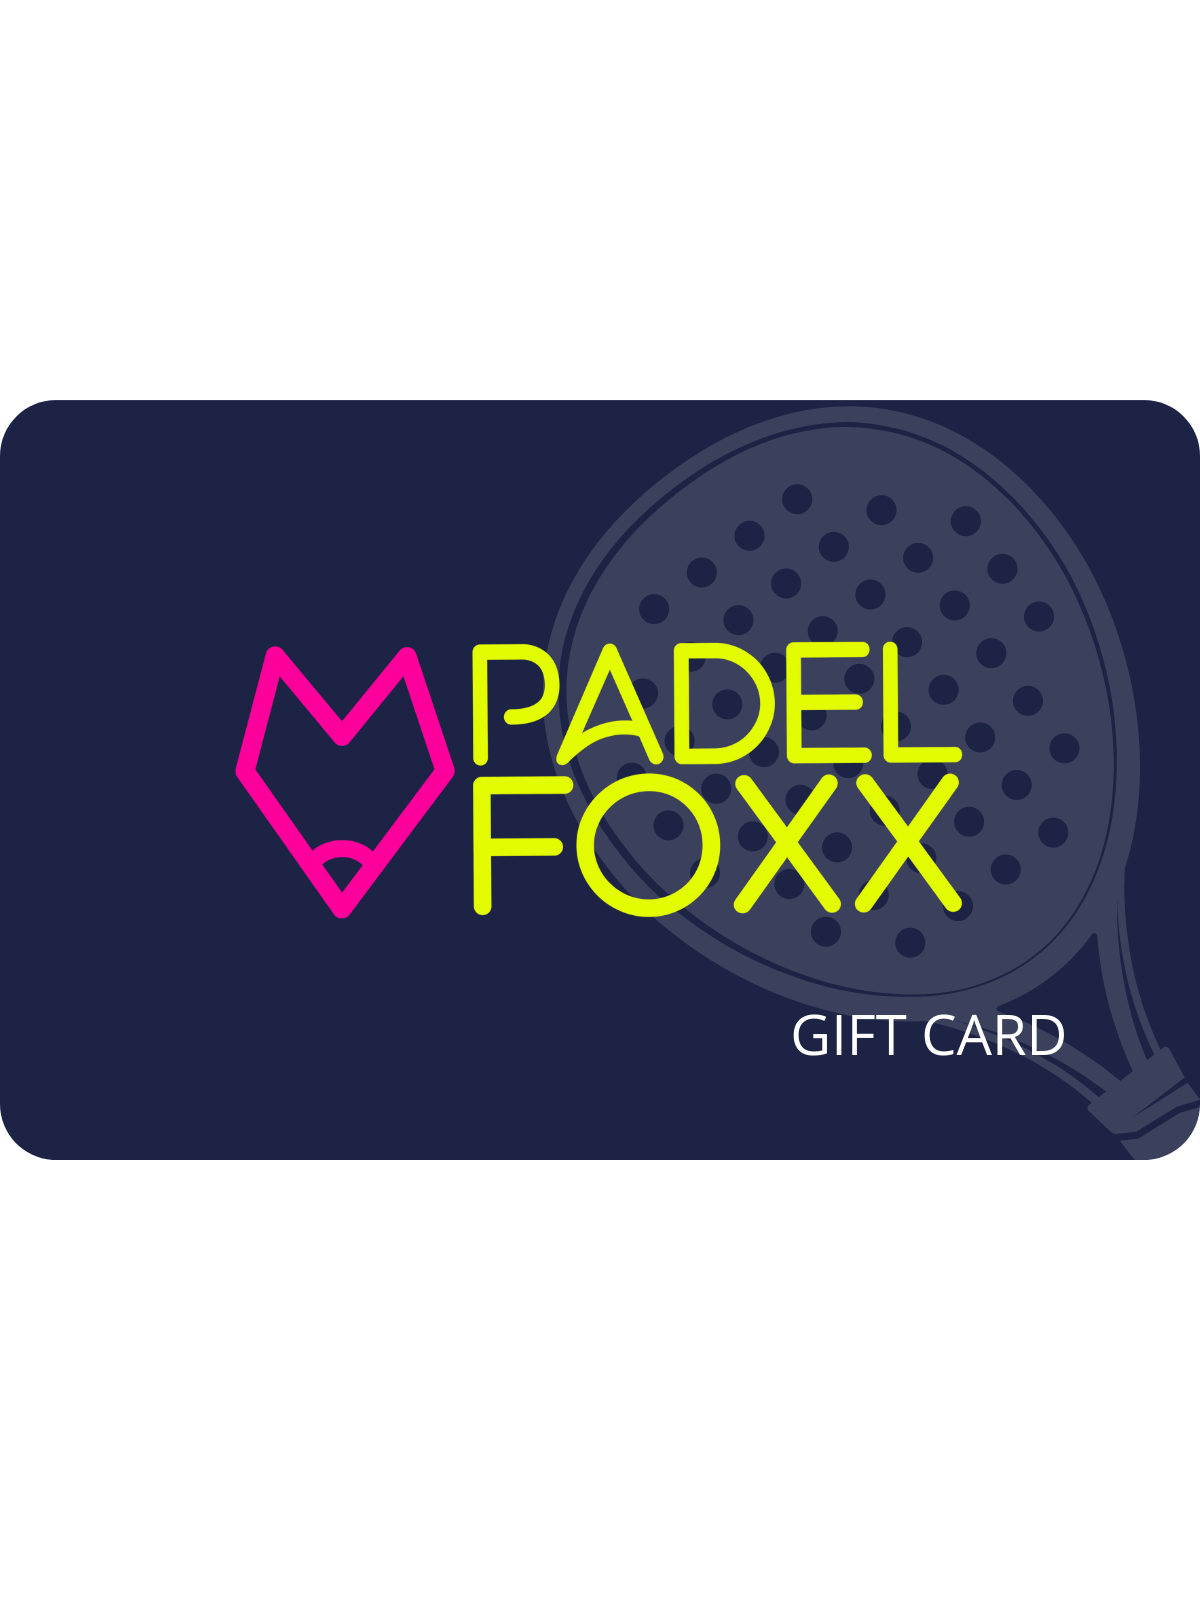 PADELFOXX Gift Card